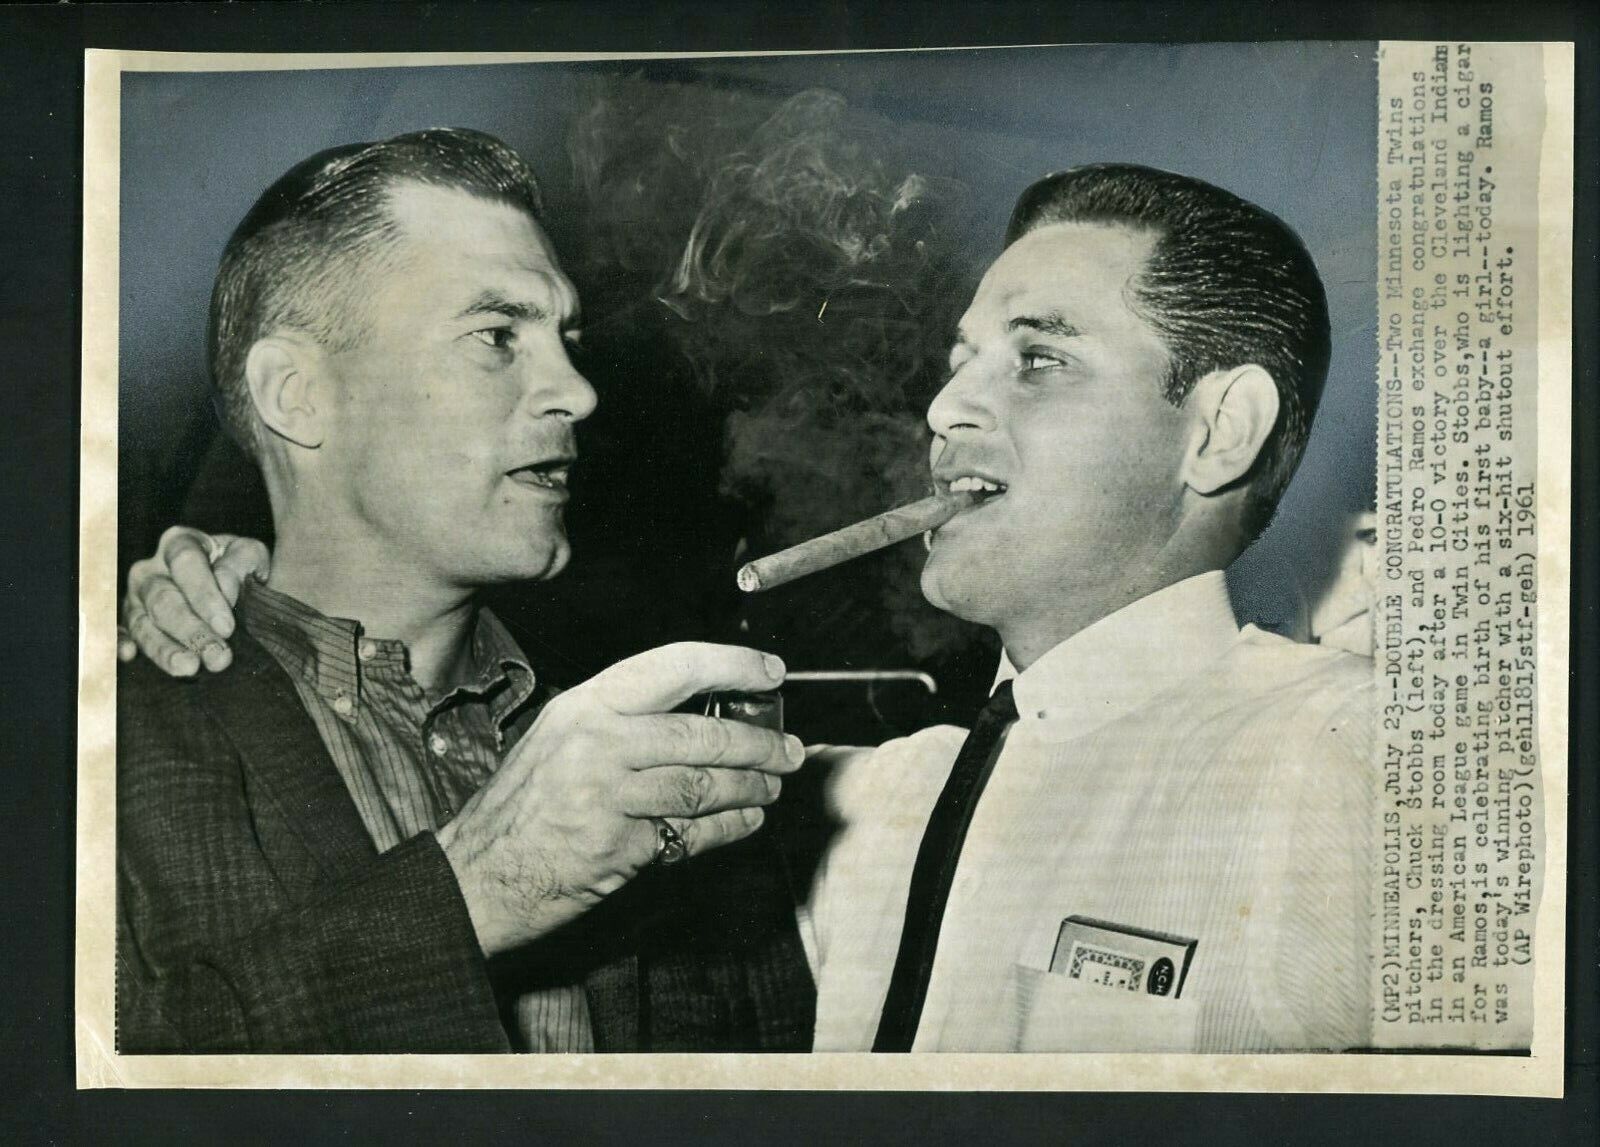 Chuck Stobbs & Pedro Ramos celebrate 1961 Press Photo Poster painting Minnesota Twins